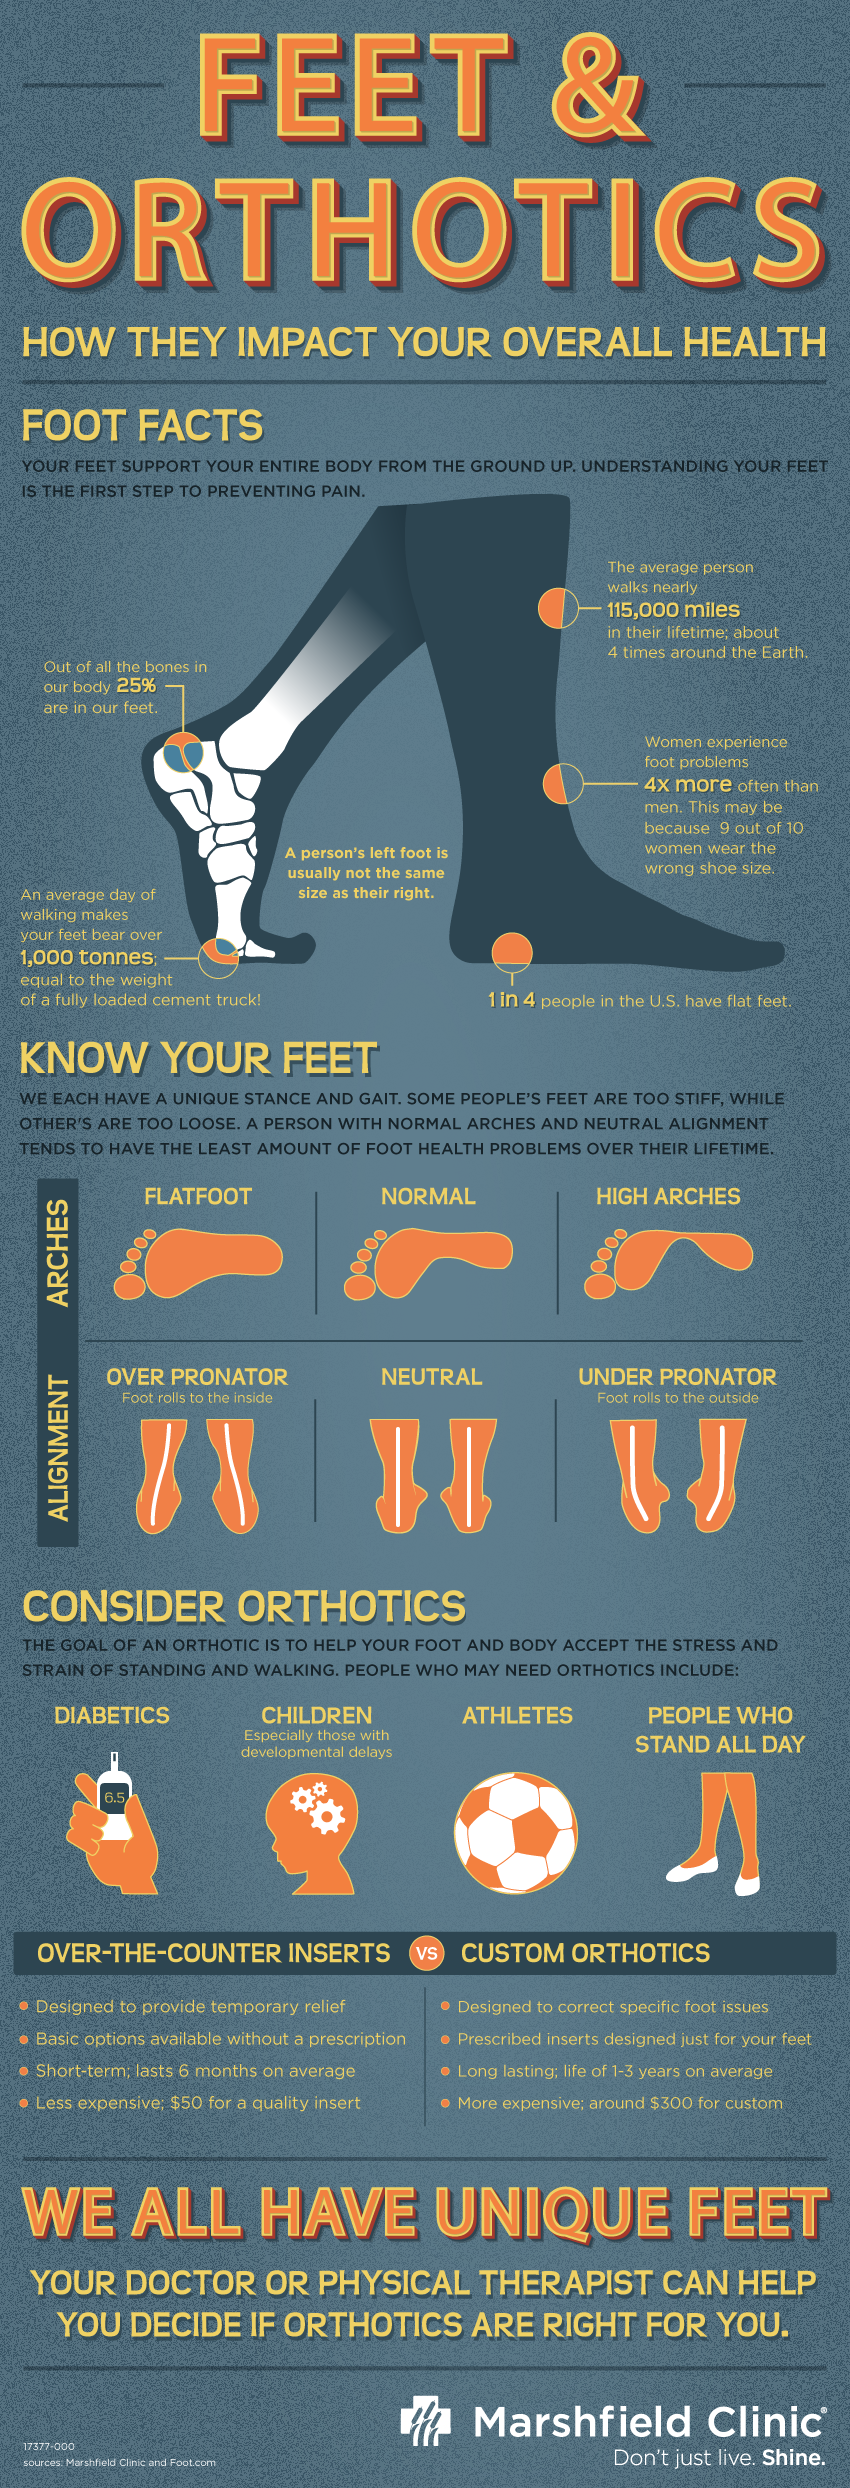 Feet and Orthotics graphic